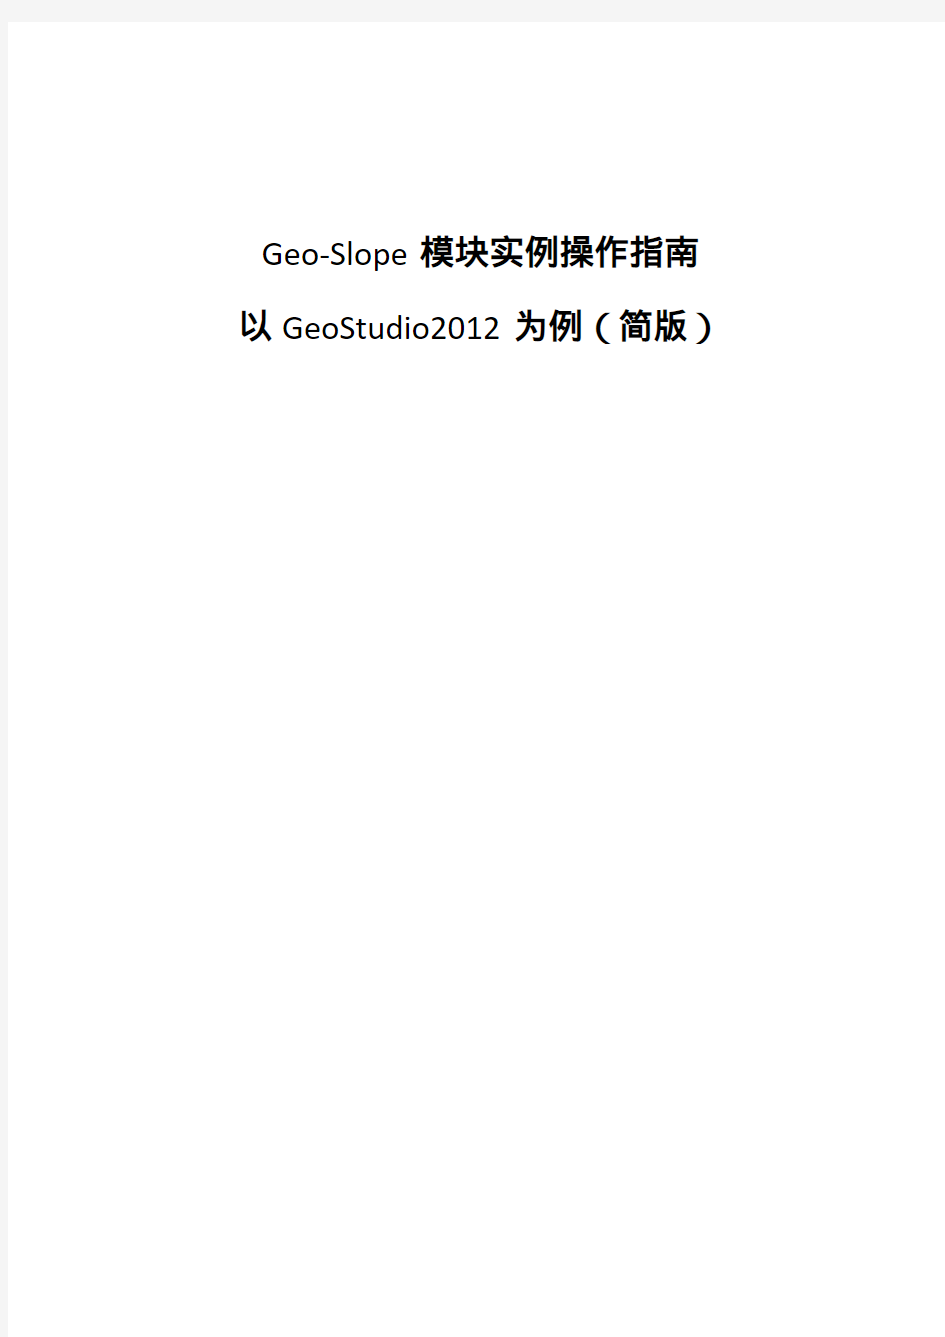 GeoStudio2012中Slope模块实例操作指南